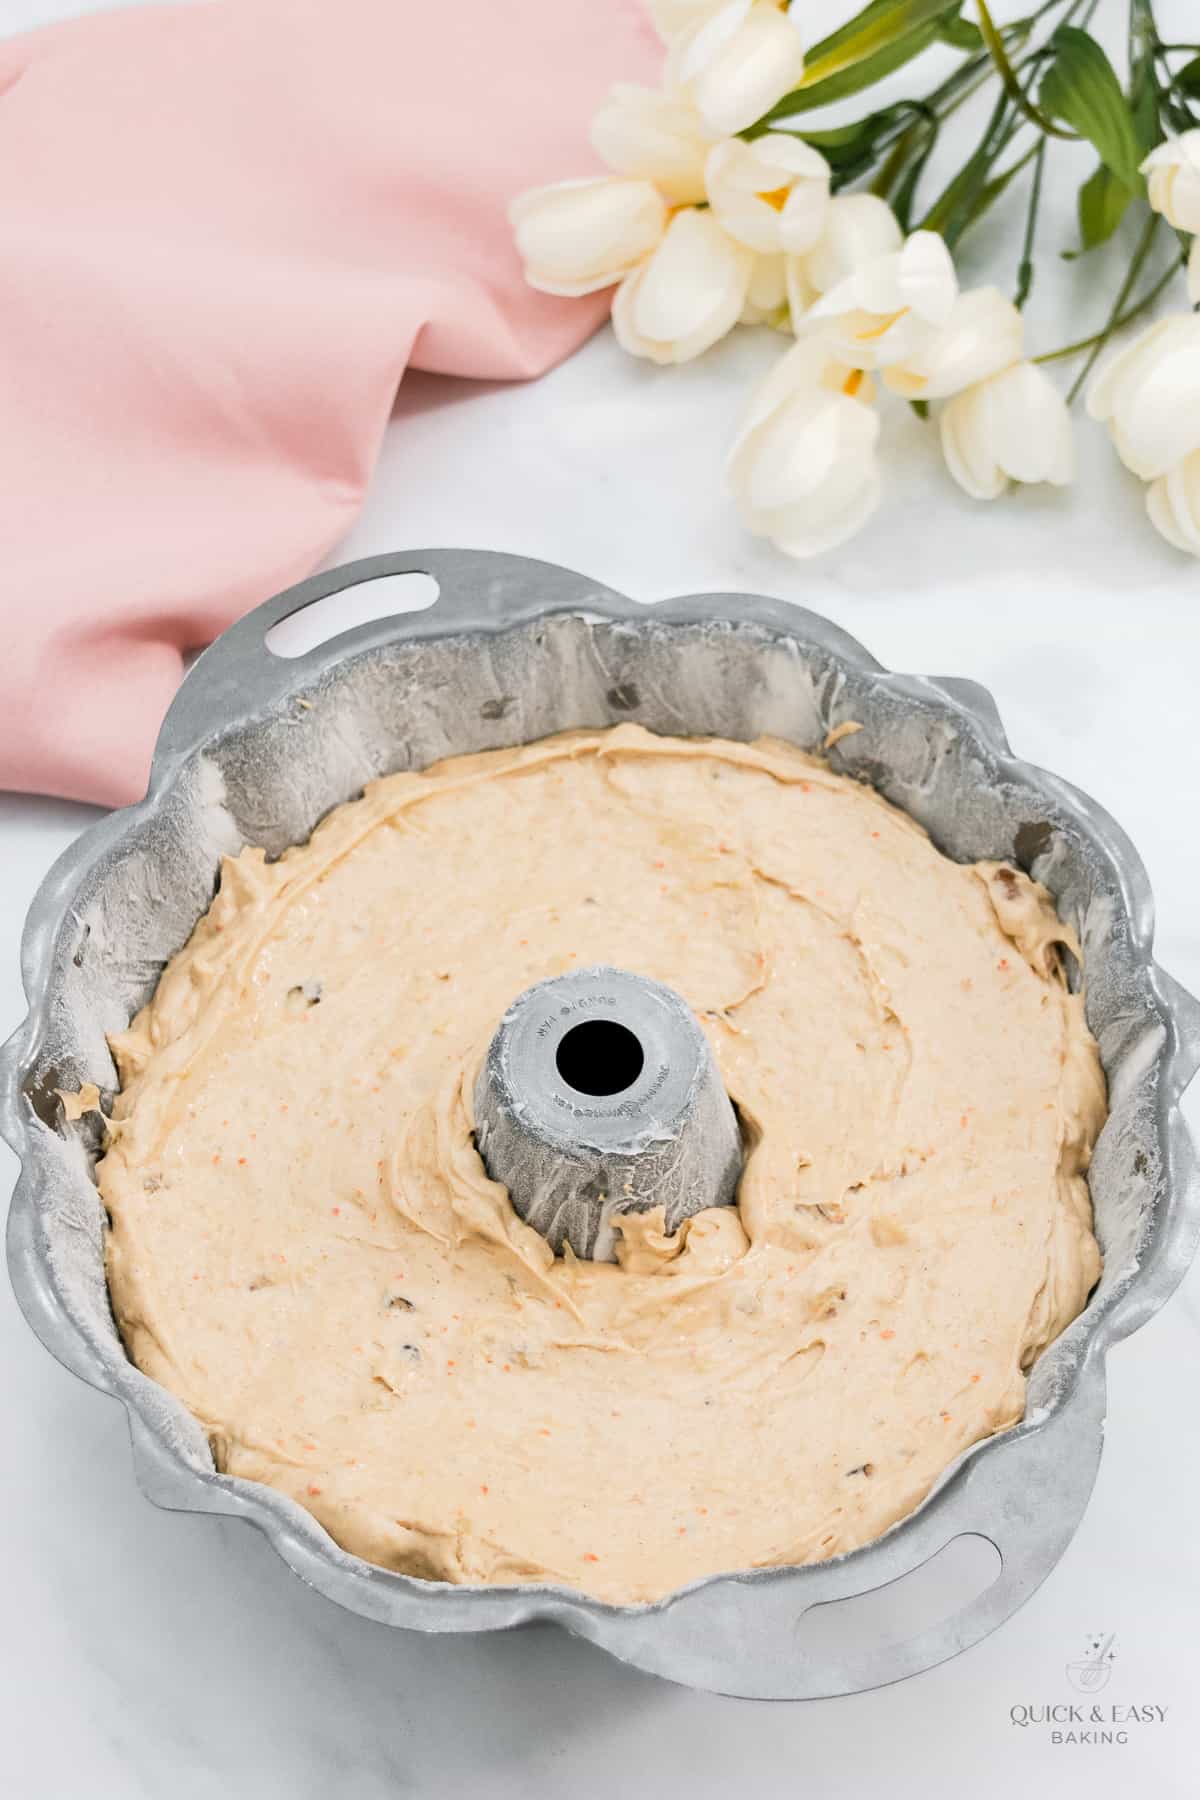 Smooth cake batter in a bundt pan.